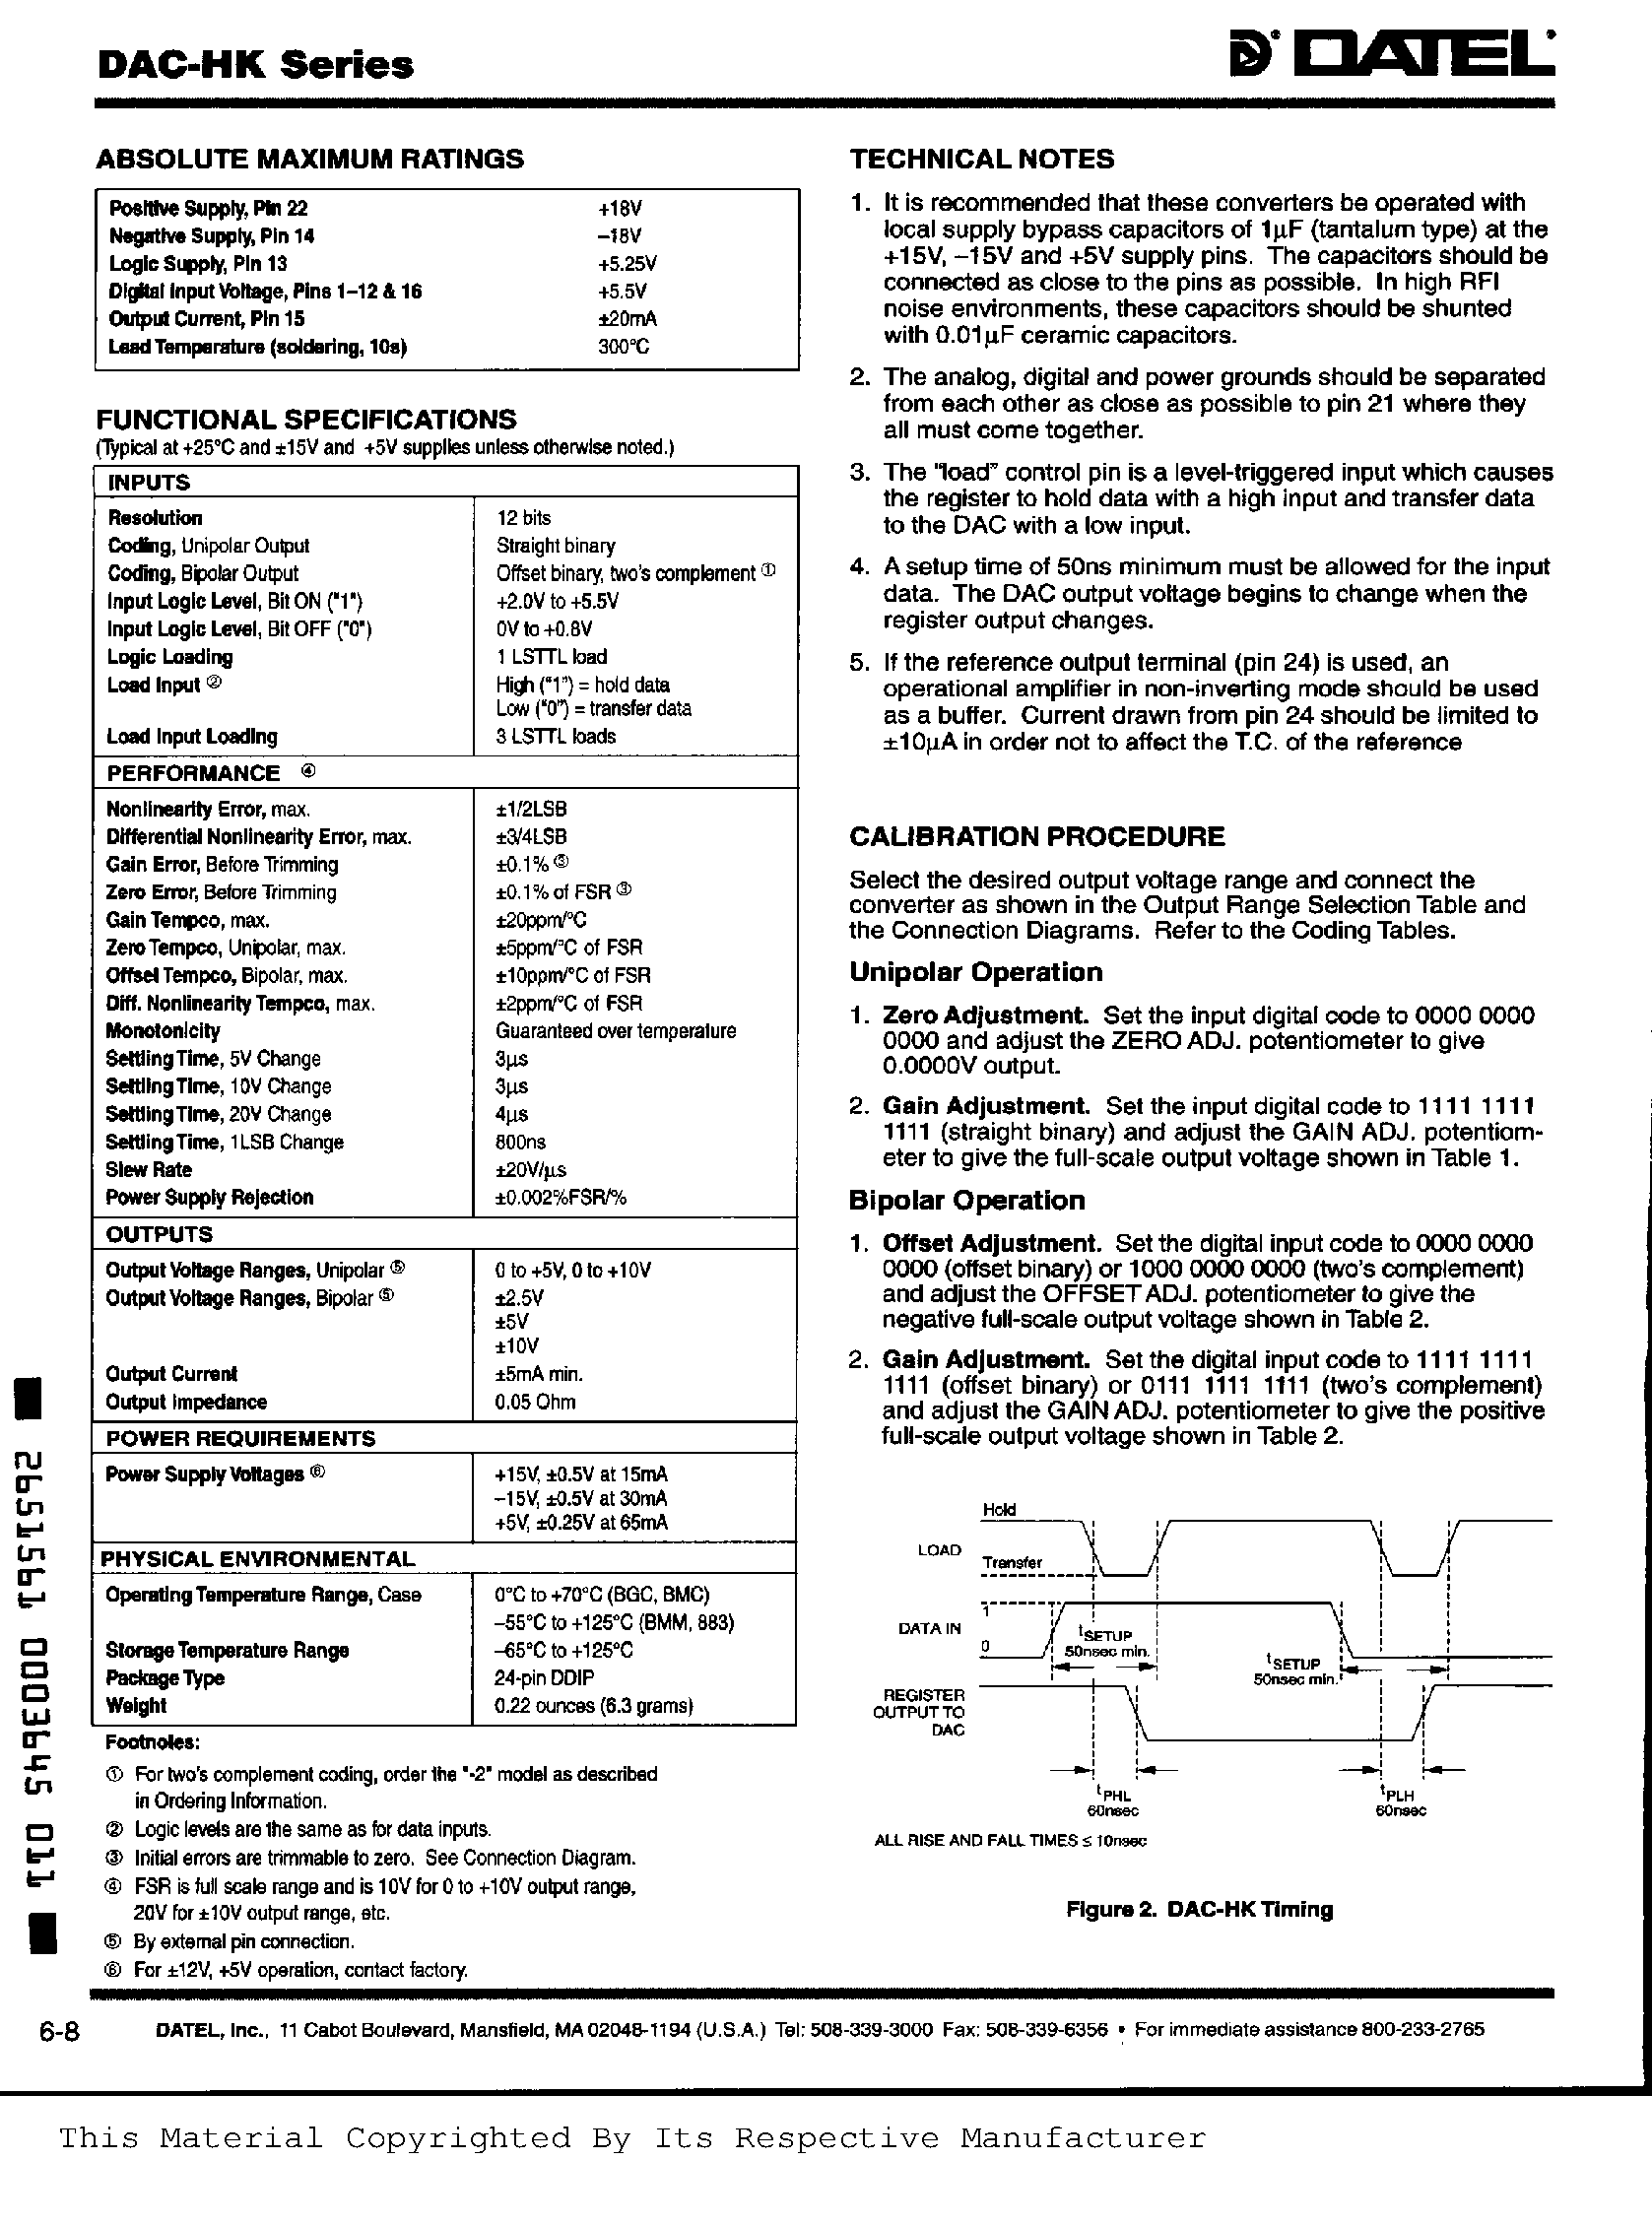 Datasheet DAC-HK12BMC-2 - HIGH PERFORMANCE 12 BIT DAC WITH INPUT REGISTERS page 2